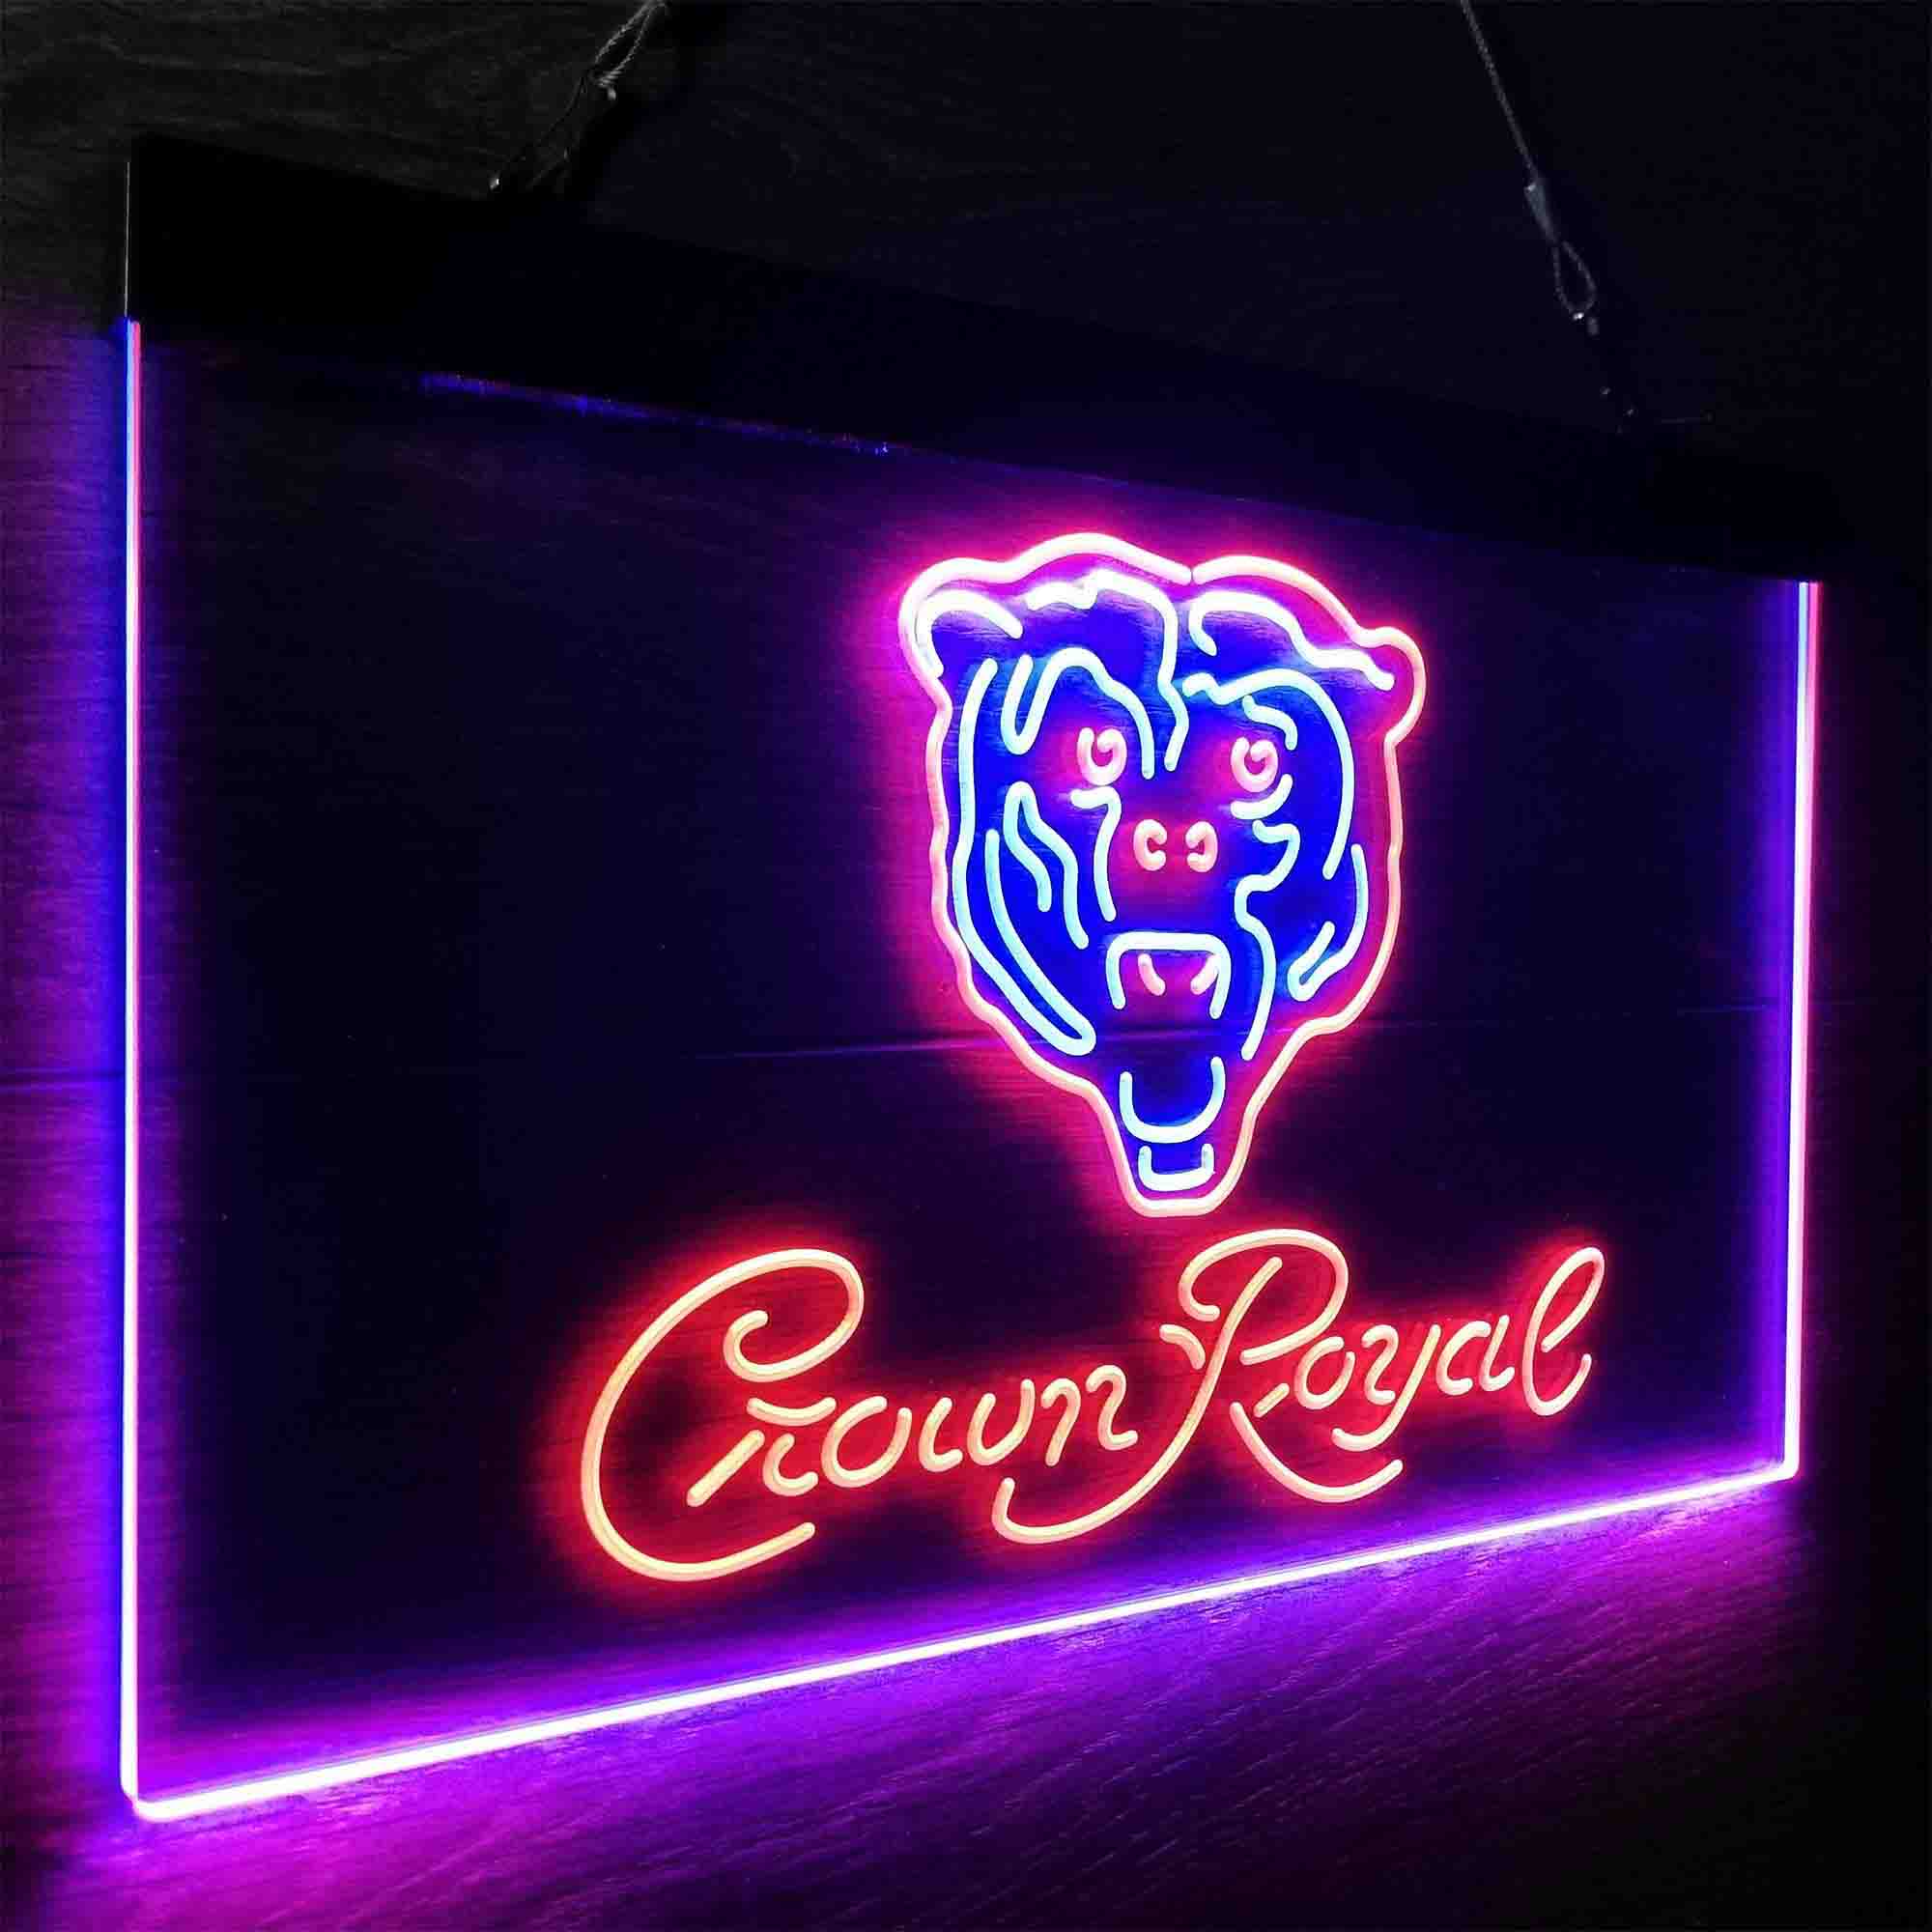 Crown Royal Bar Chicago Bears Est. 1920 LED Neon Sign